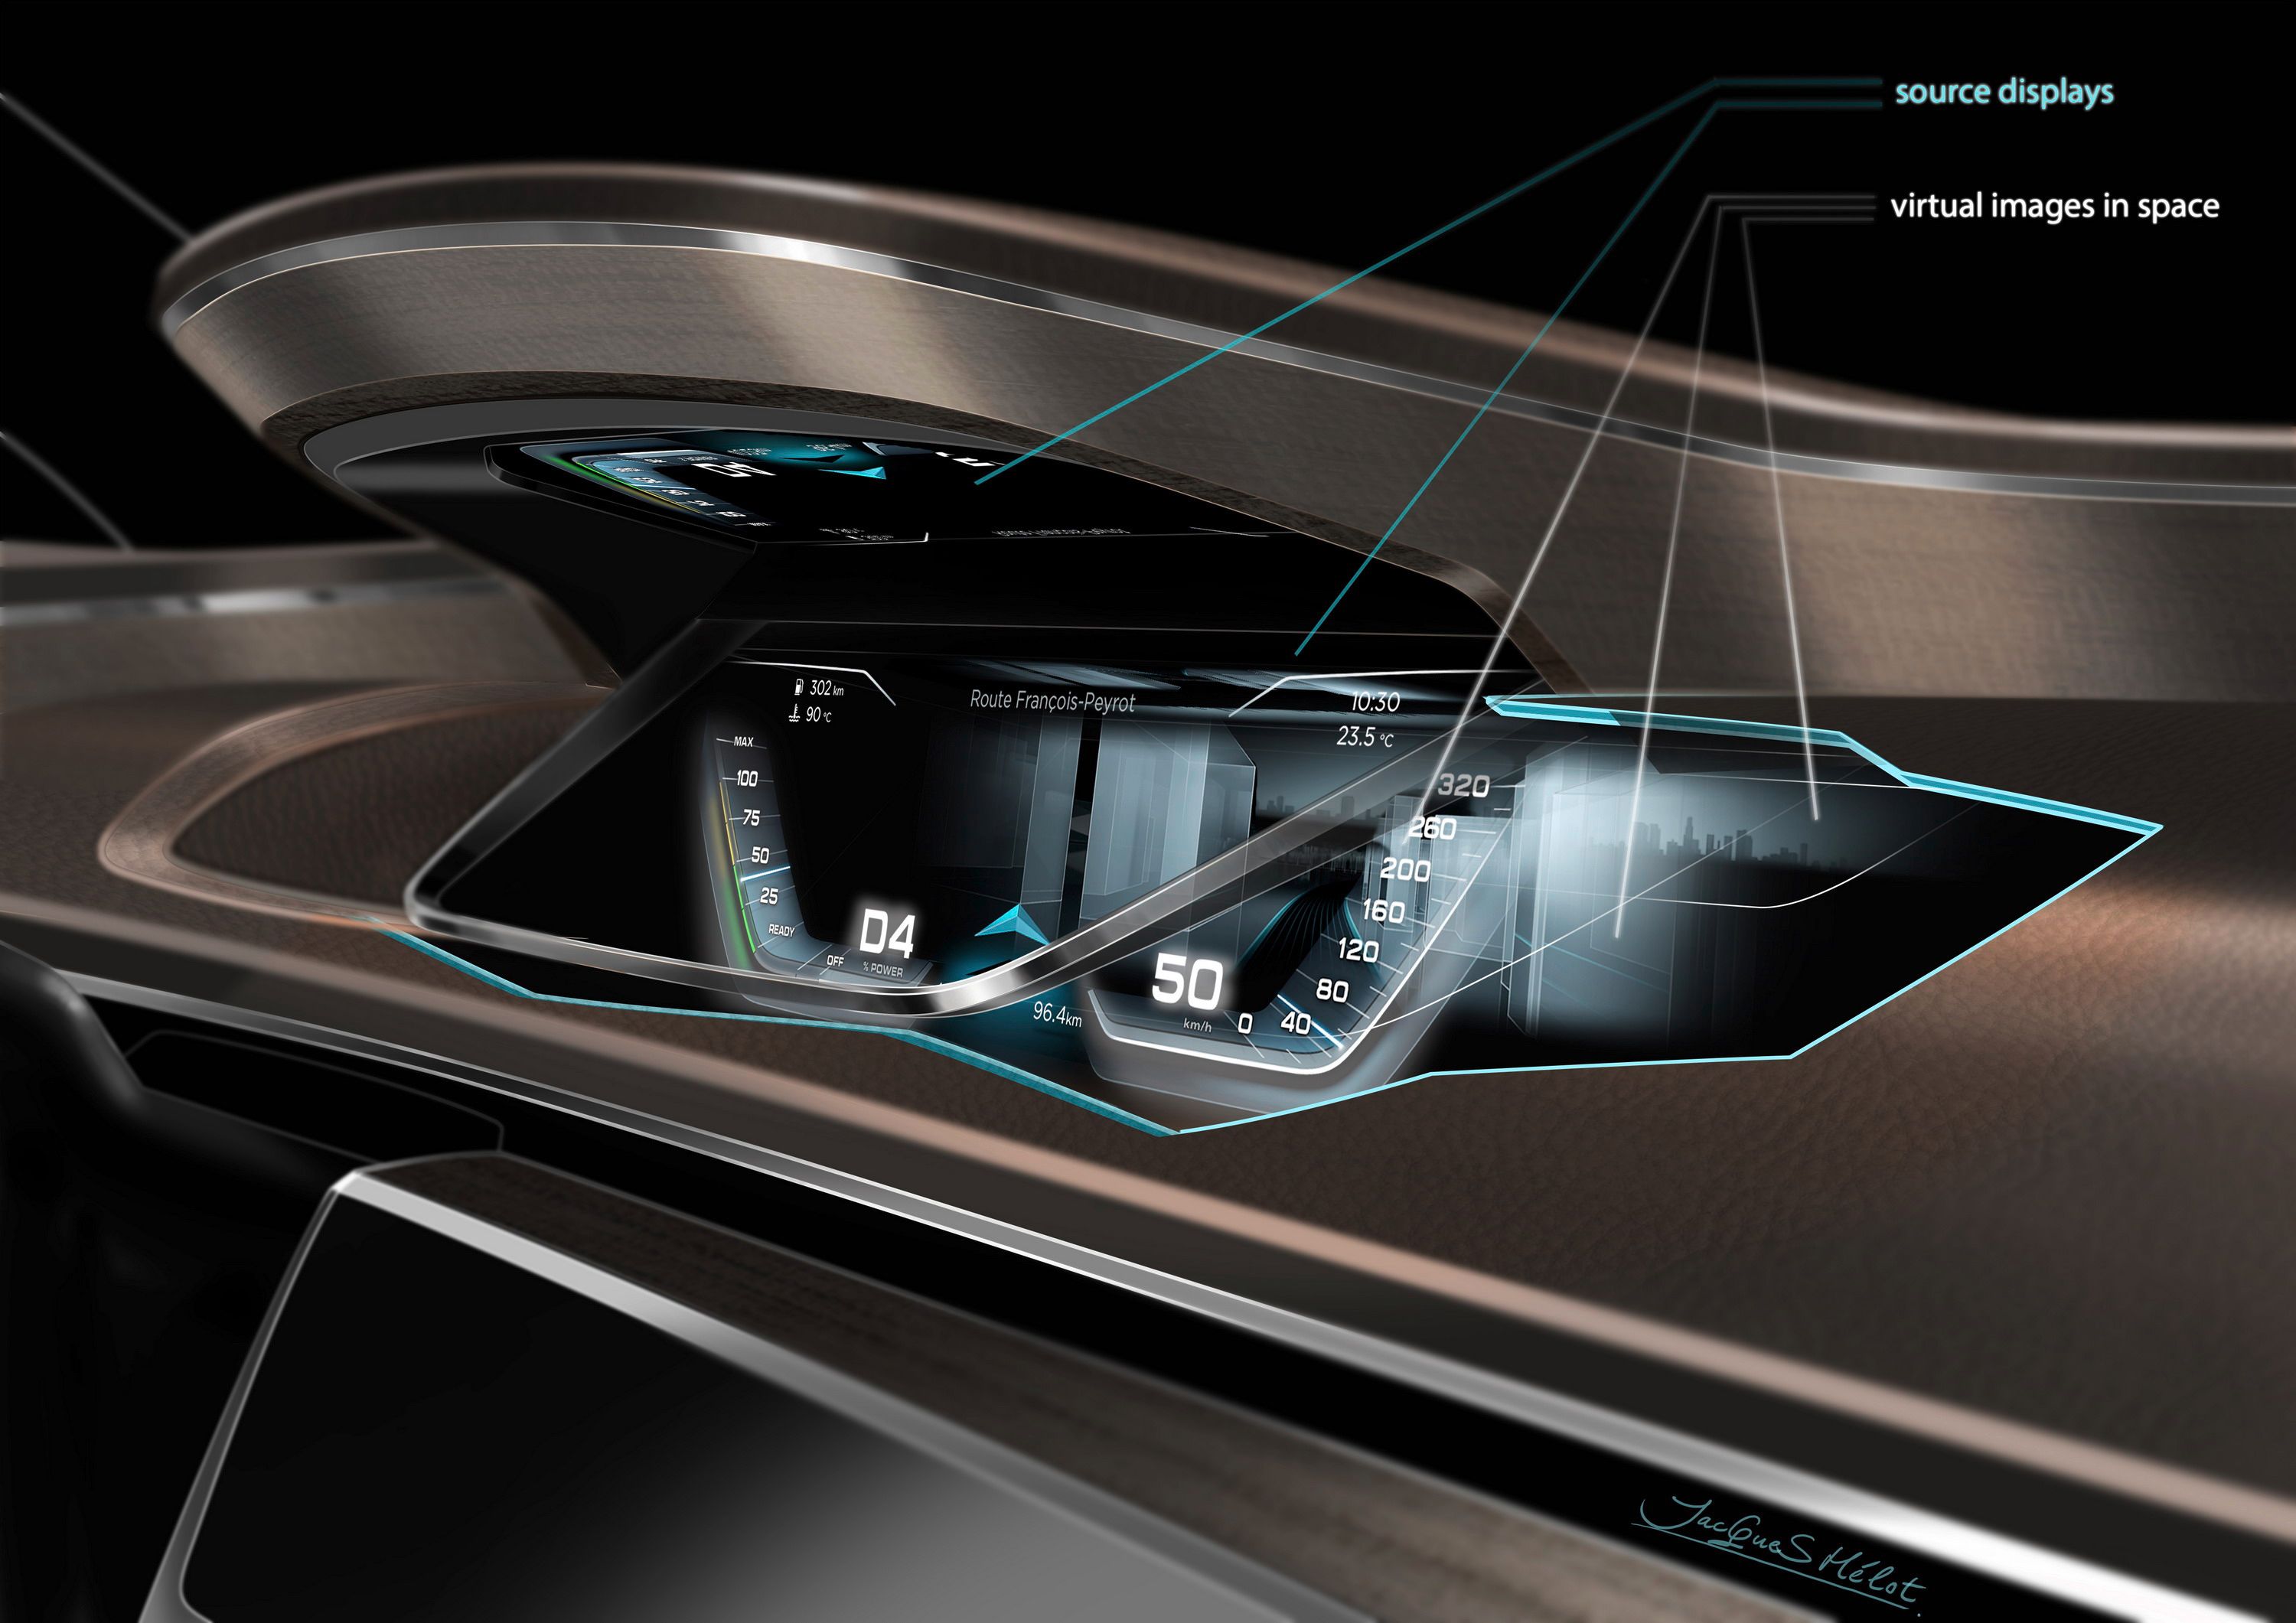 2015 Audi Prologue Avant Concept